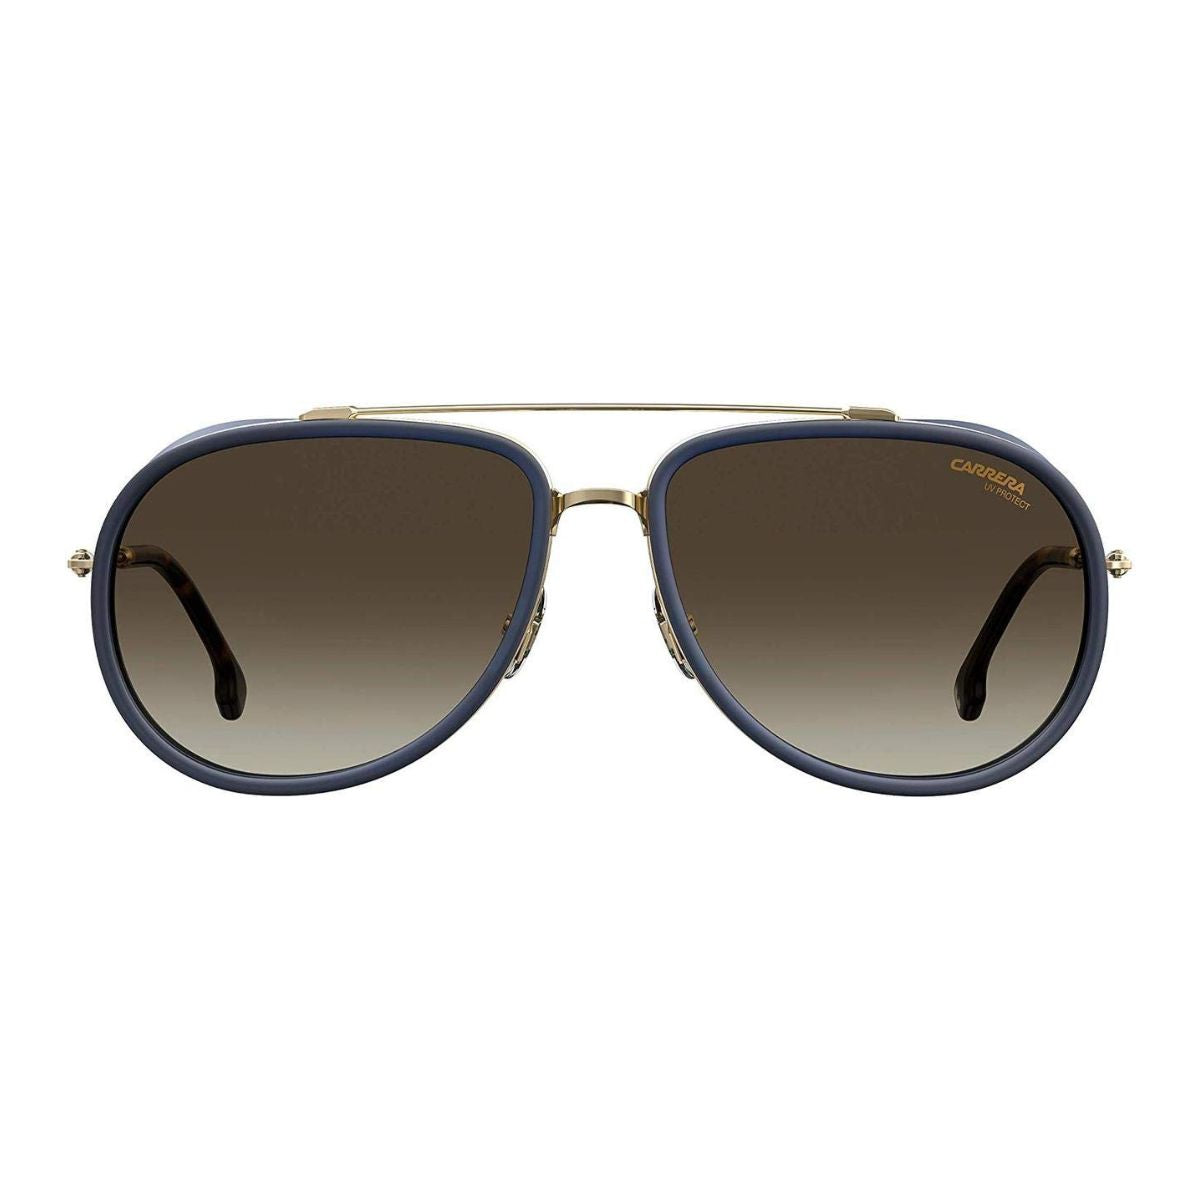 "Buy Stylish Carrera Trending Sunglasses For Mens At Optorium"